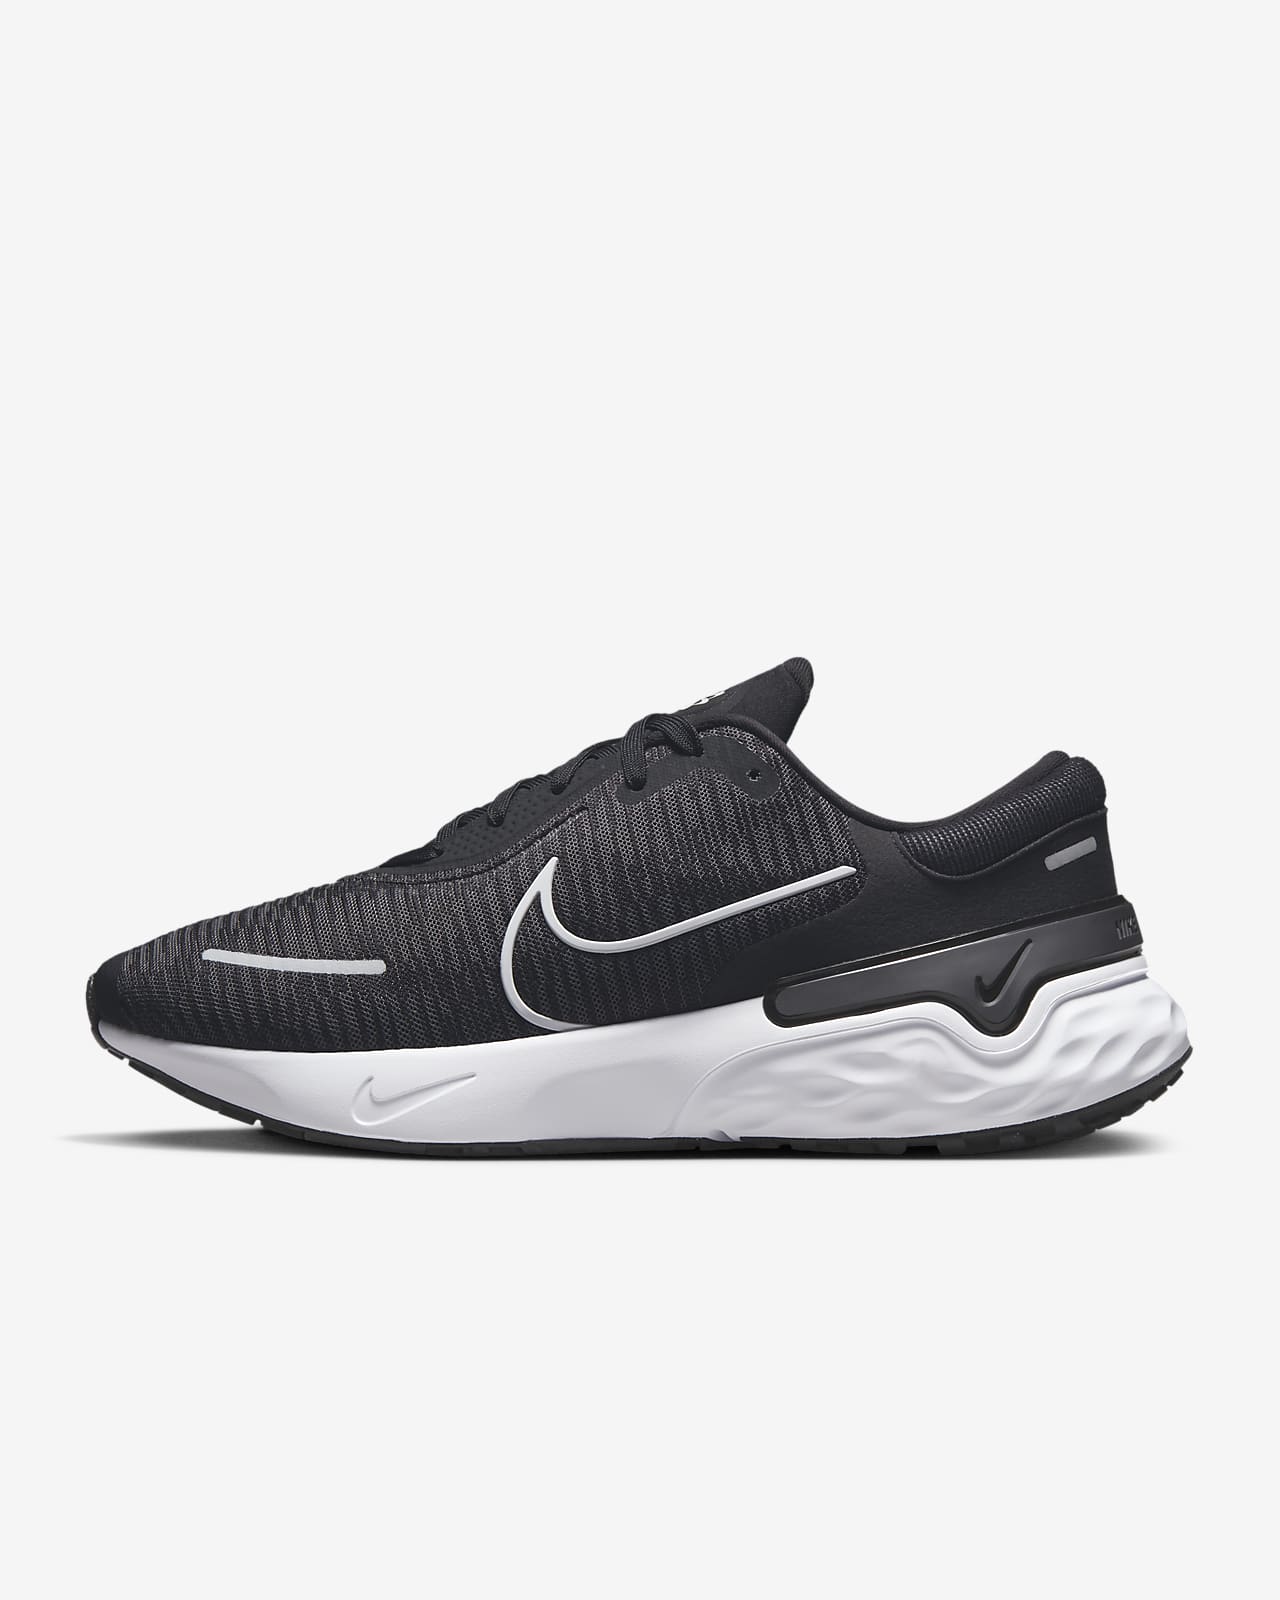 Nike Mens Air Max 90 Leather Running Shoes Black/Black 302519-001 Size 10 -  Walmart.com